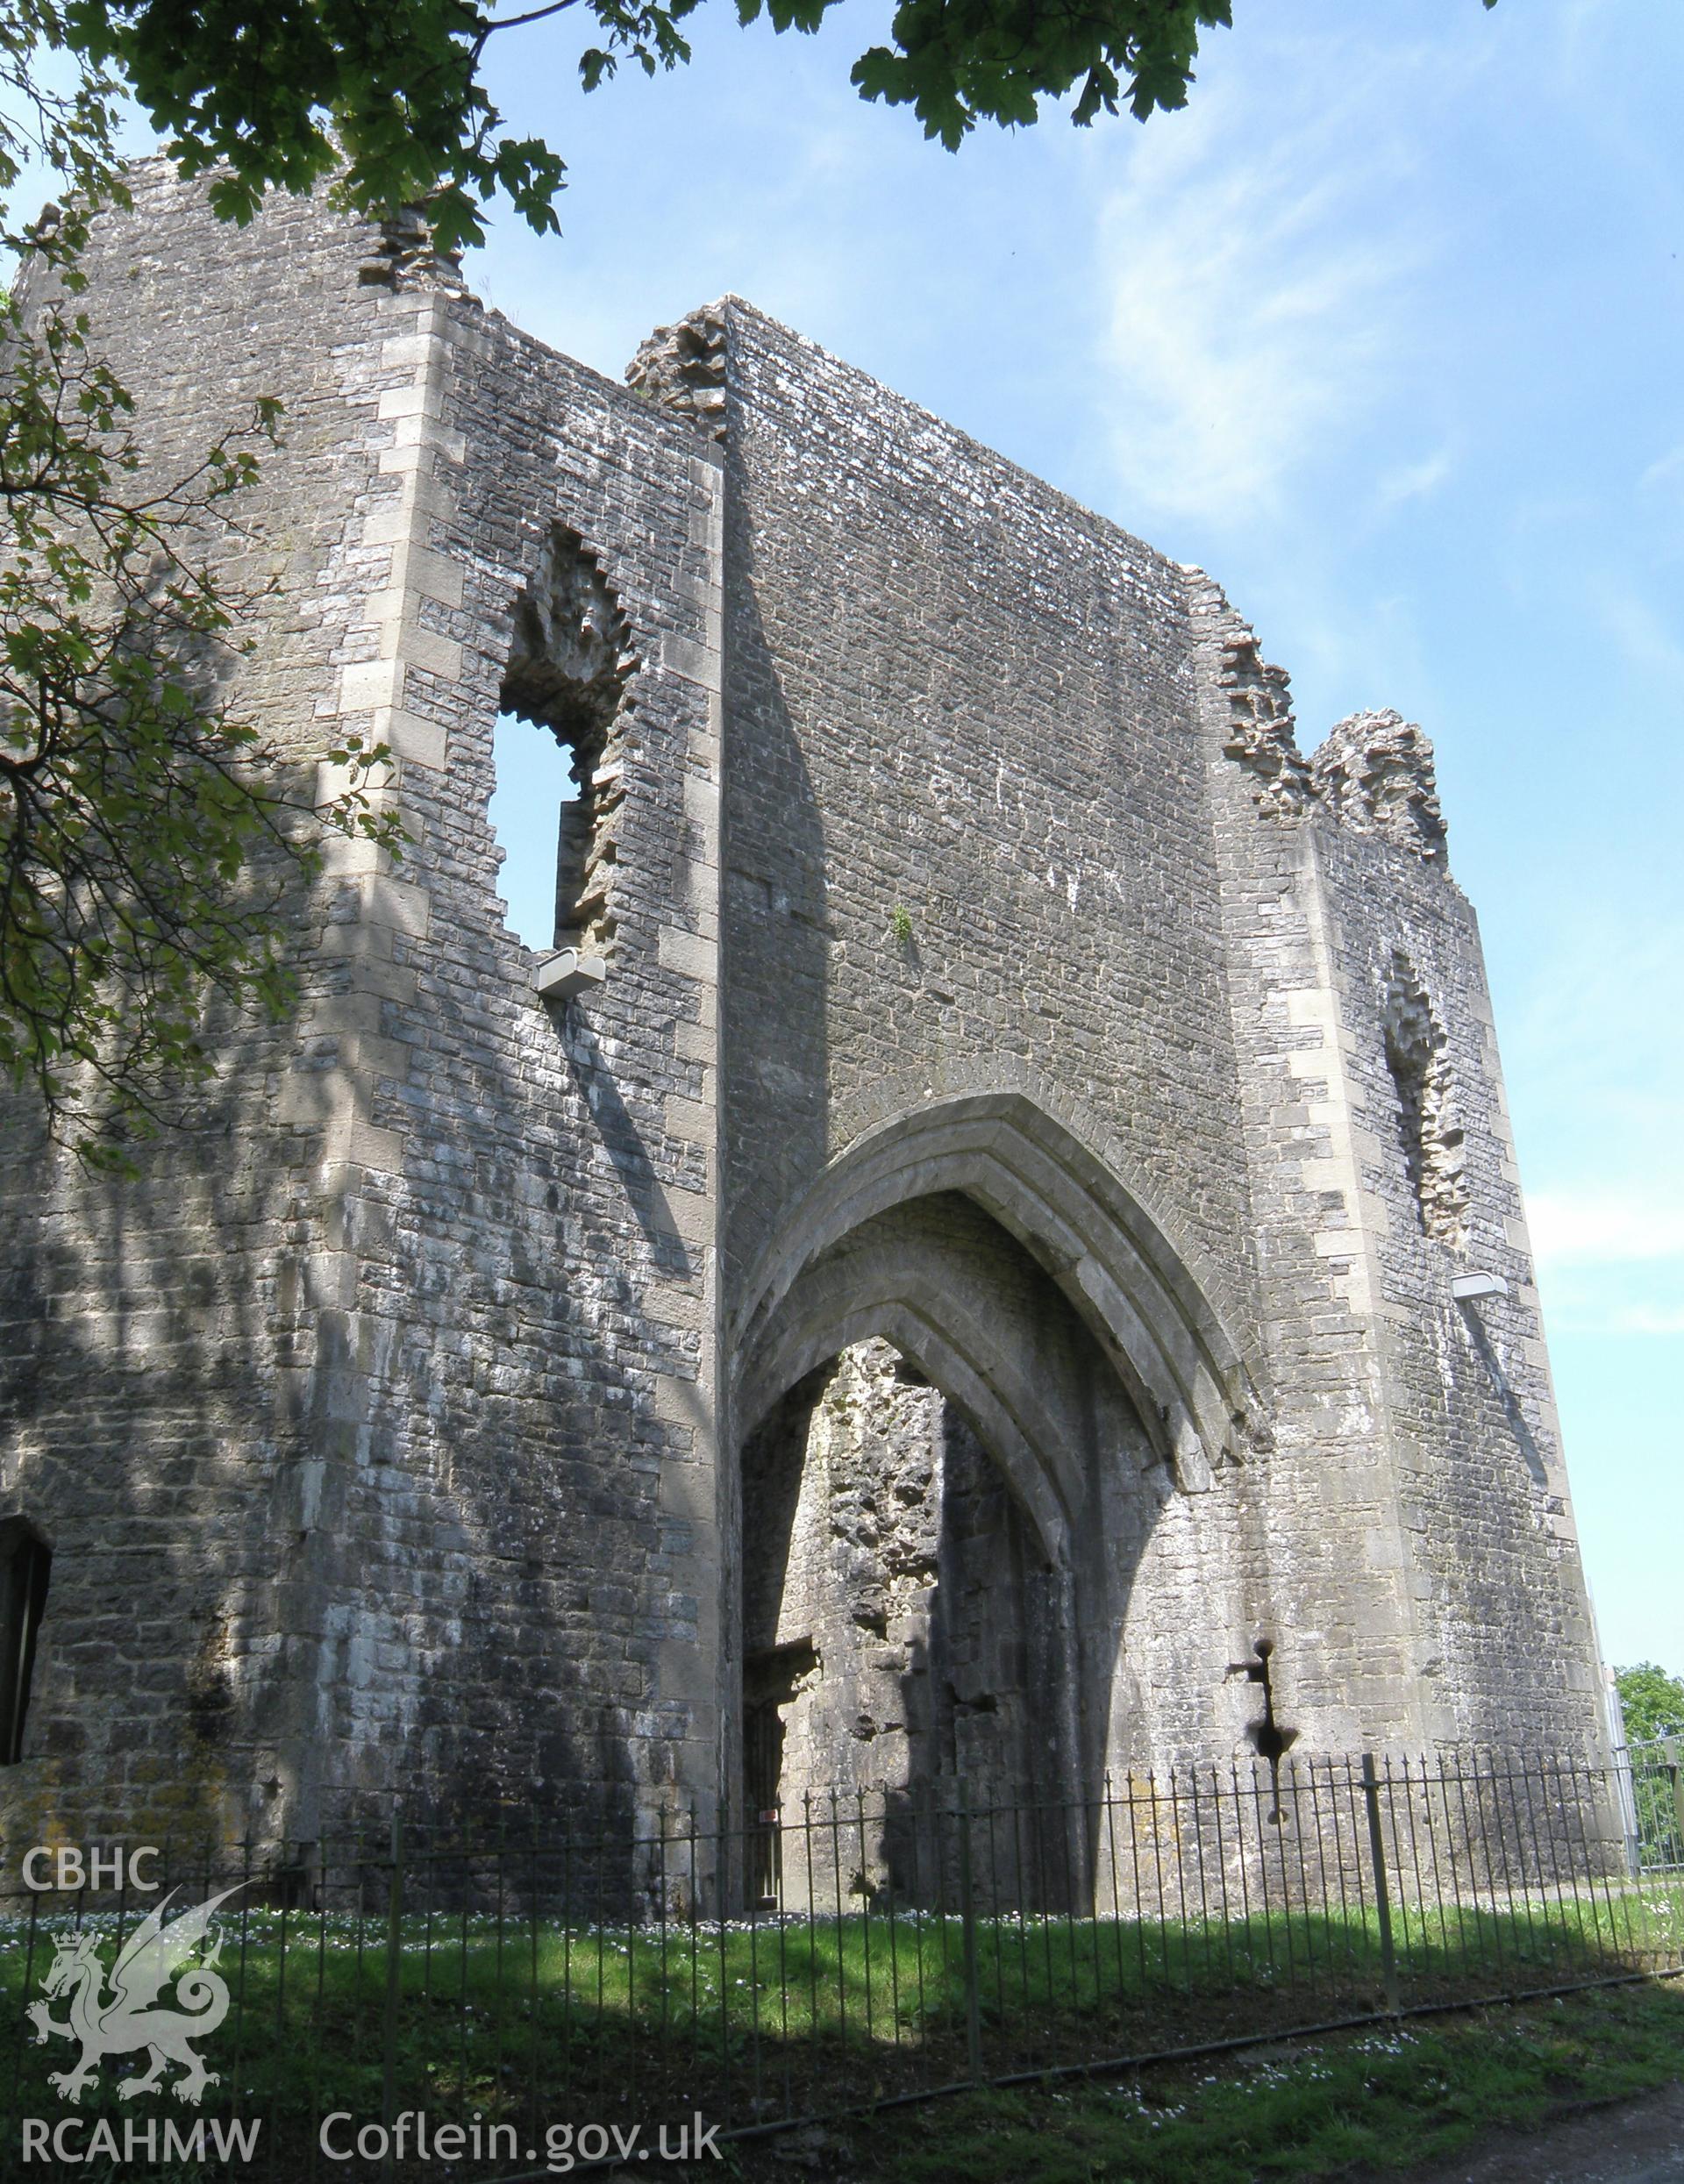 Colour photo showing Llanblethian Castle, produced by Paul R. Davis,  20th May 2012.